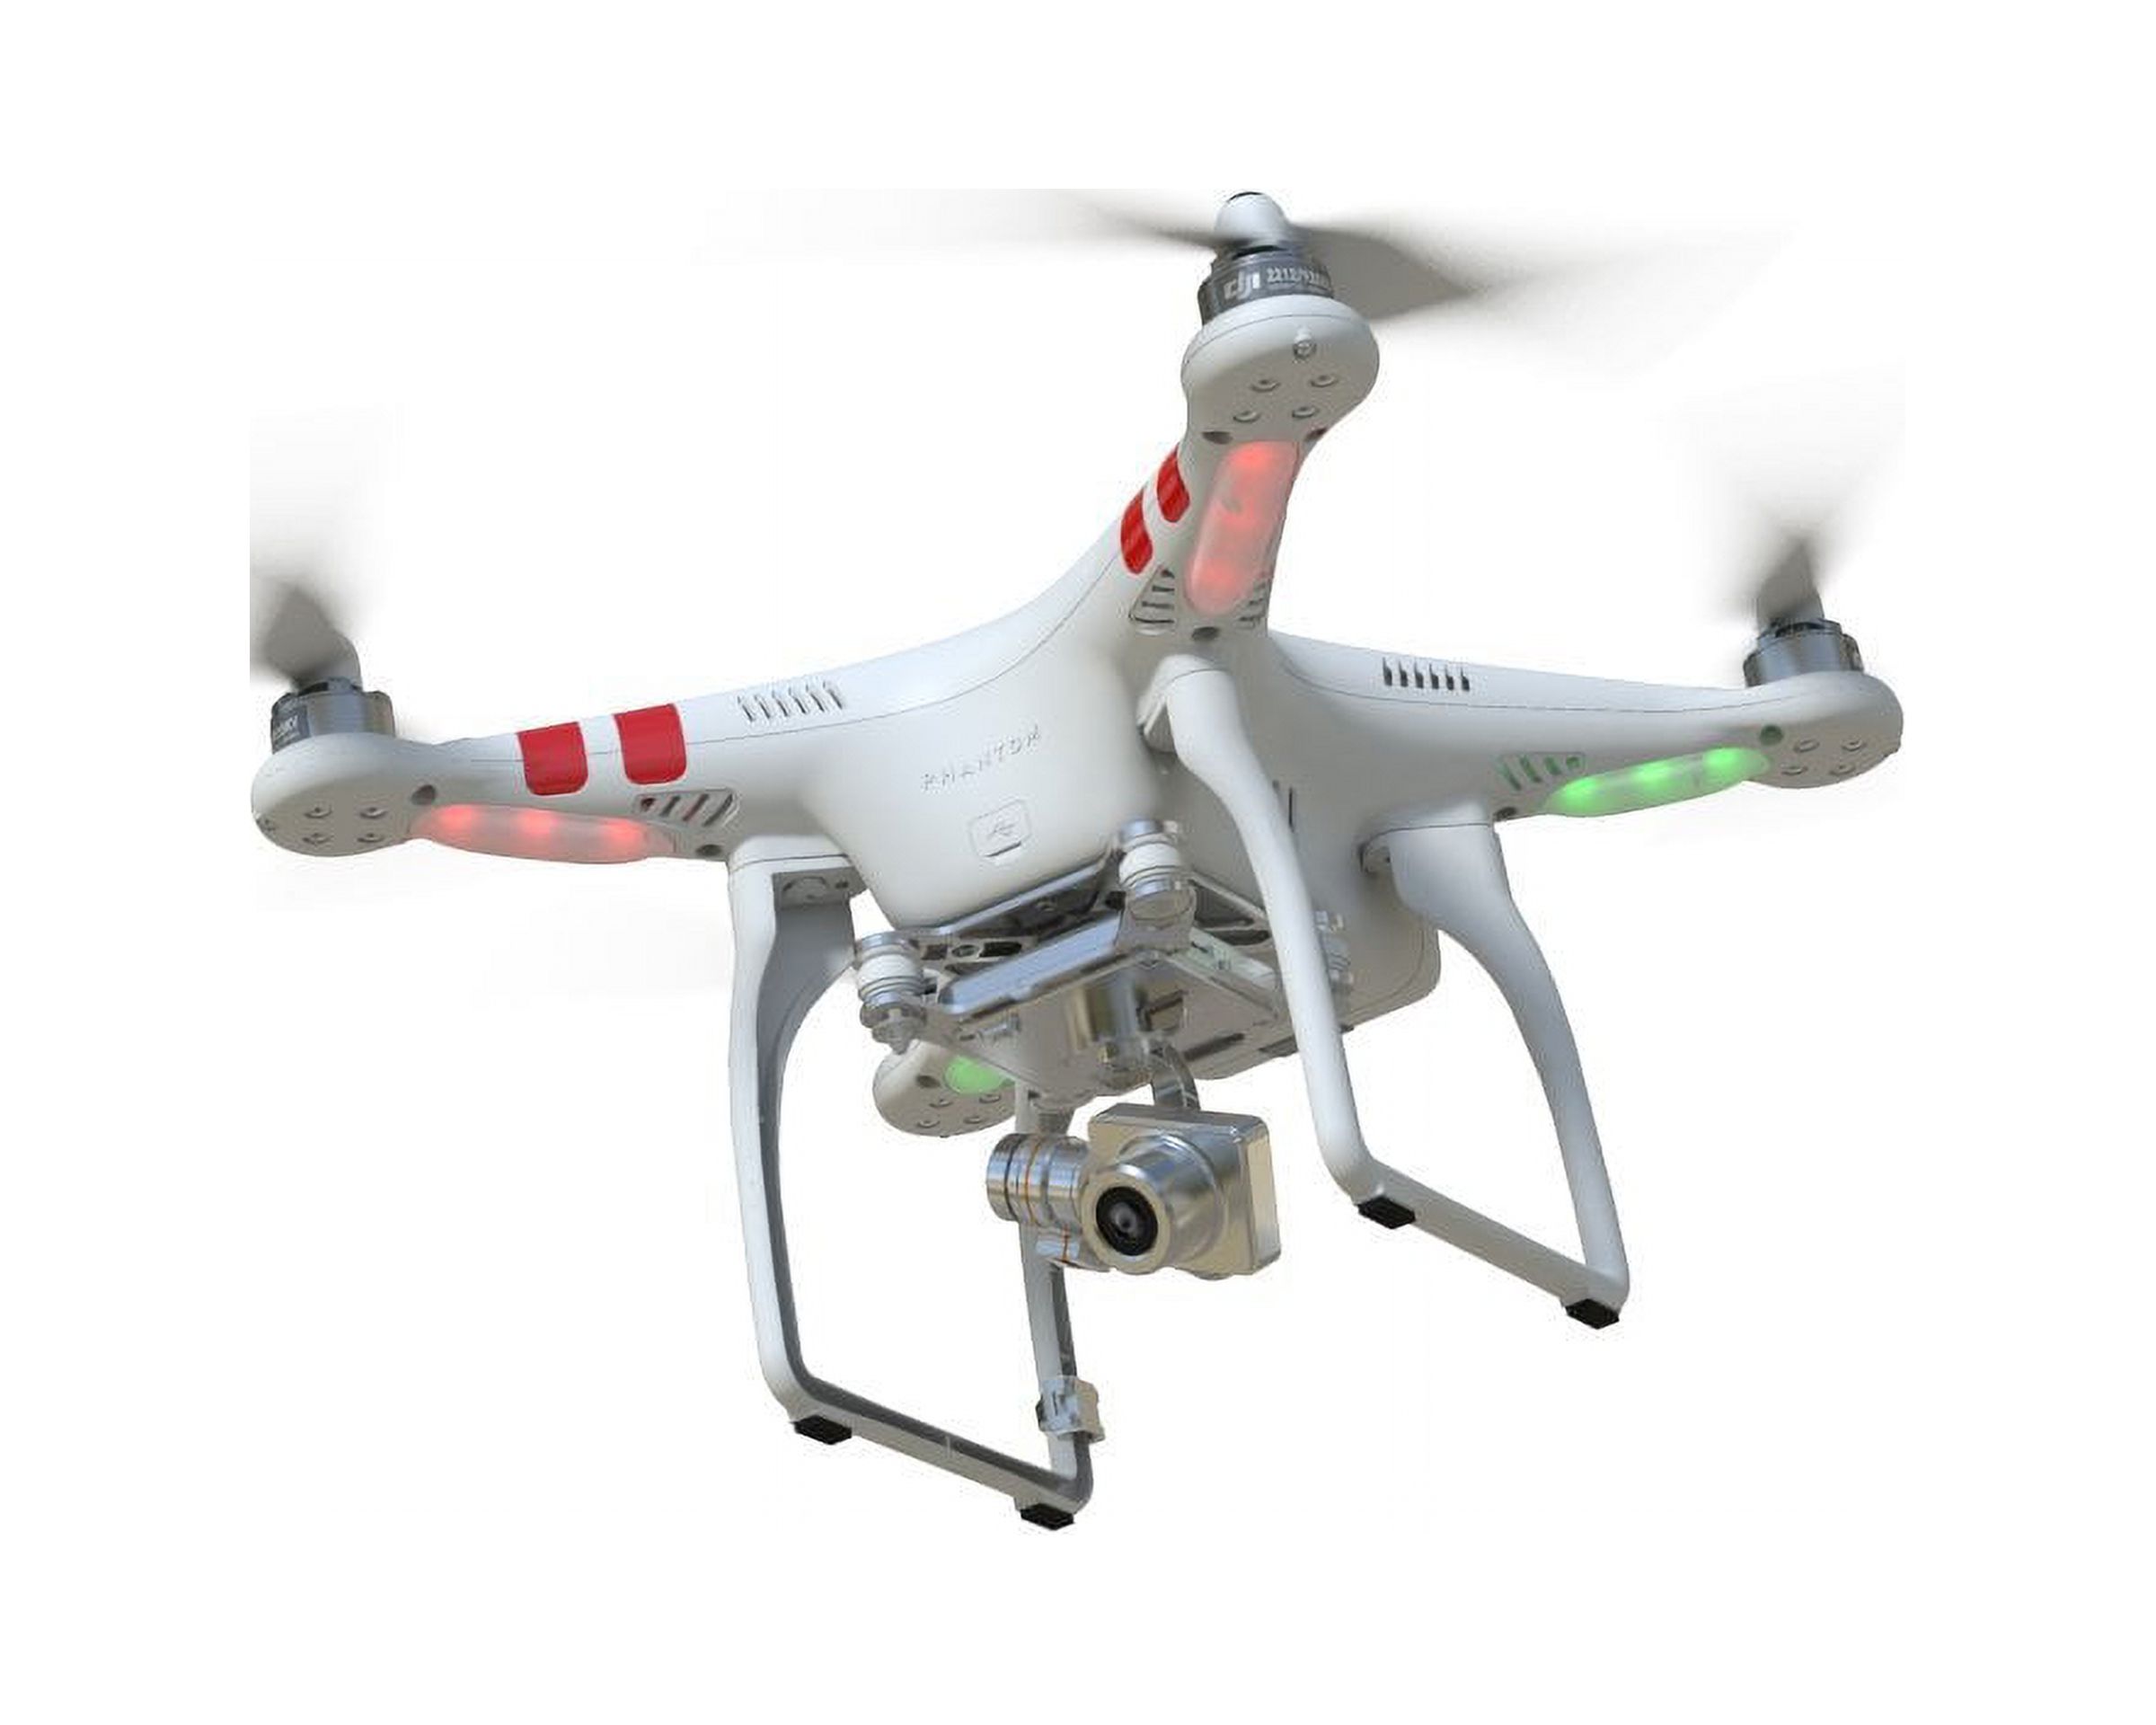 DJI Phantom 3 Standard Drone - image 1 of 3